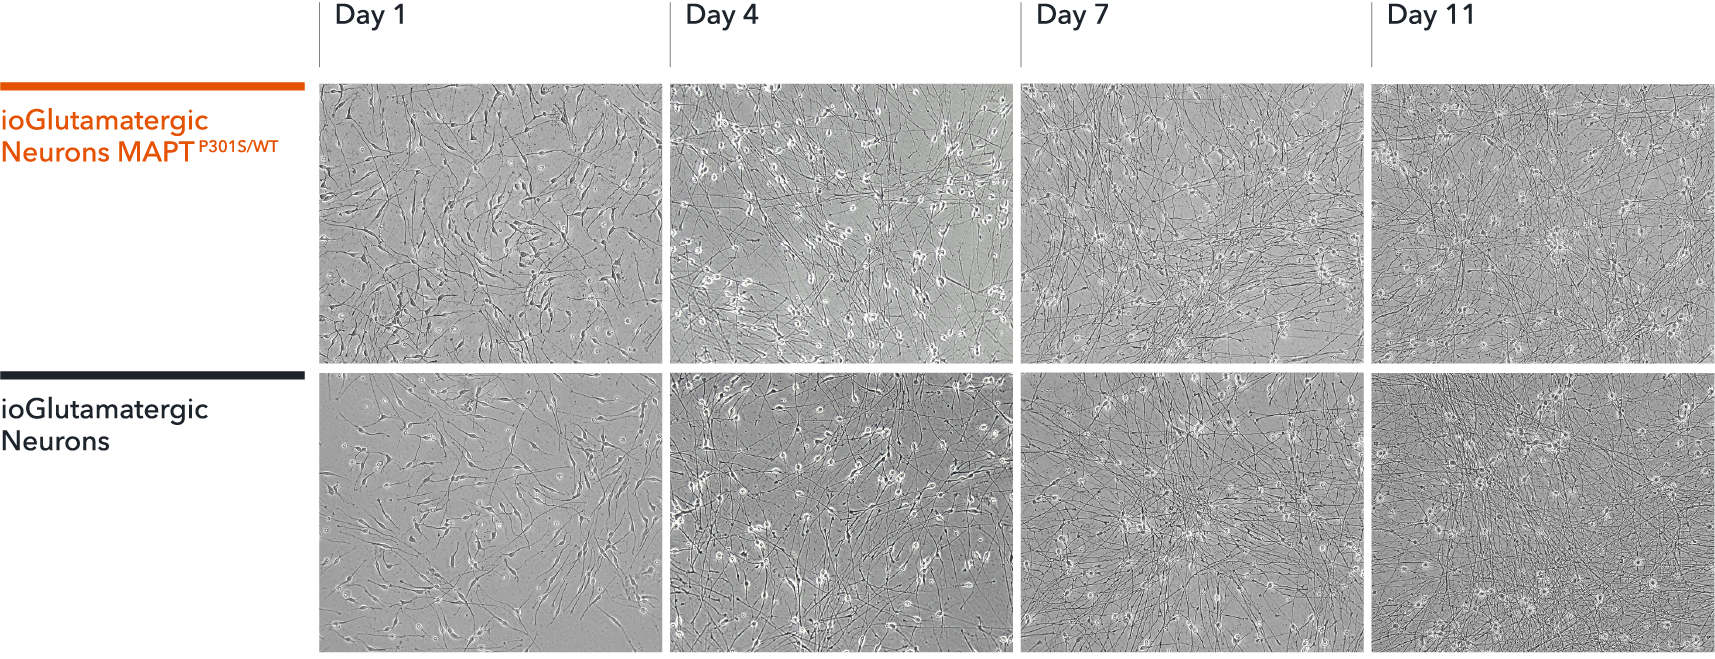 ioGlutamatergic neurons MAPT P301S/WT brightfield morphology